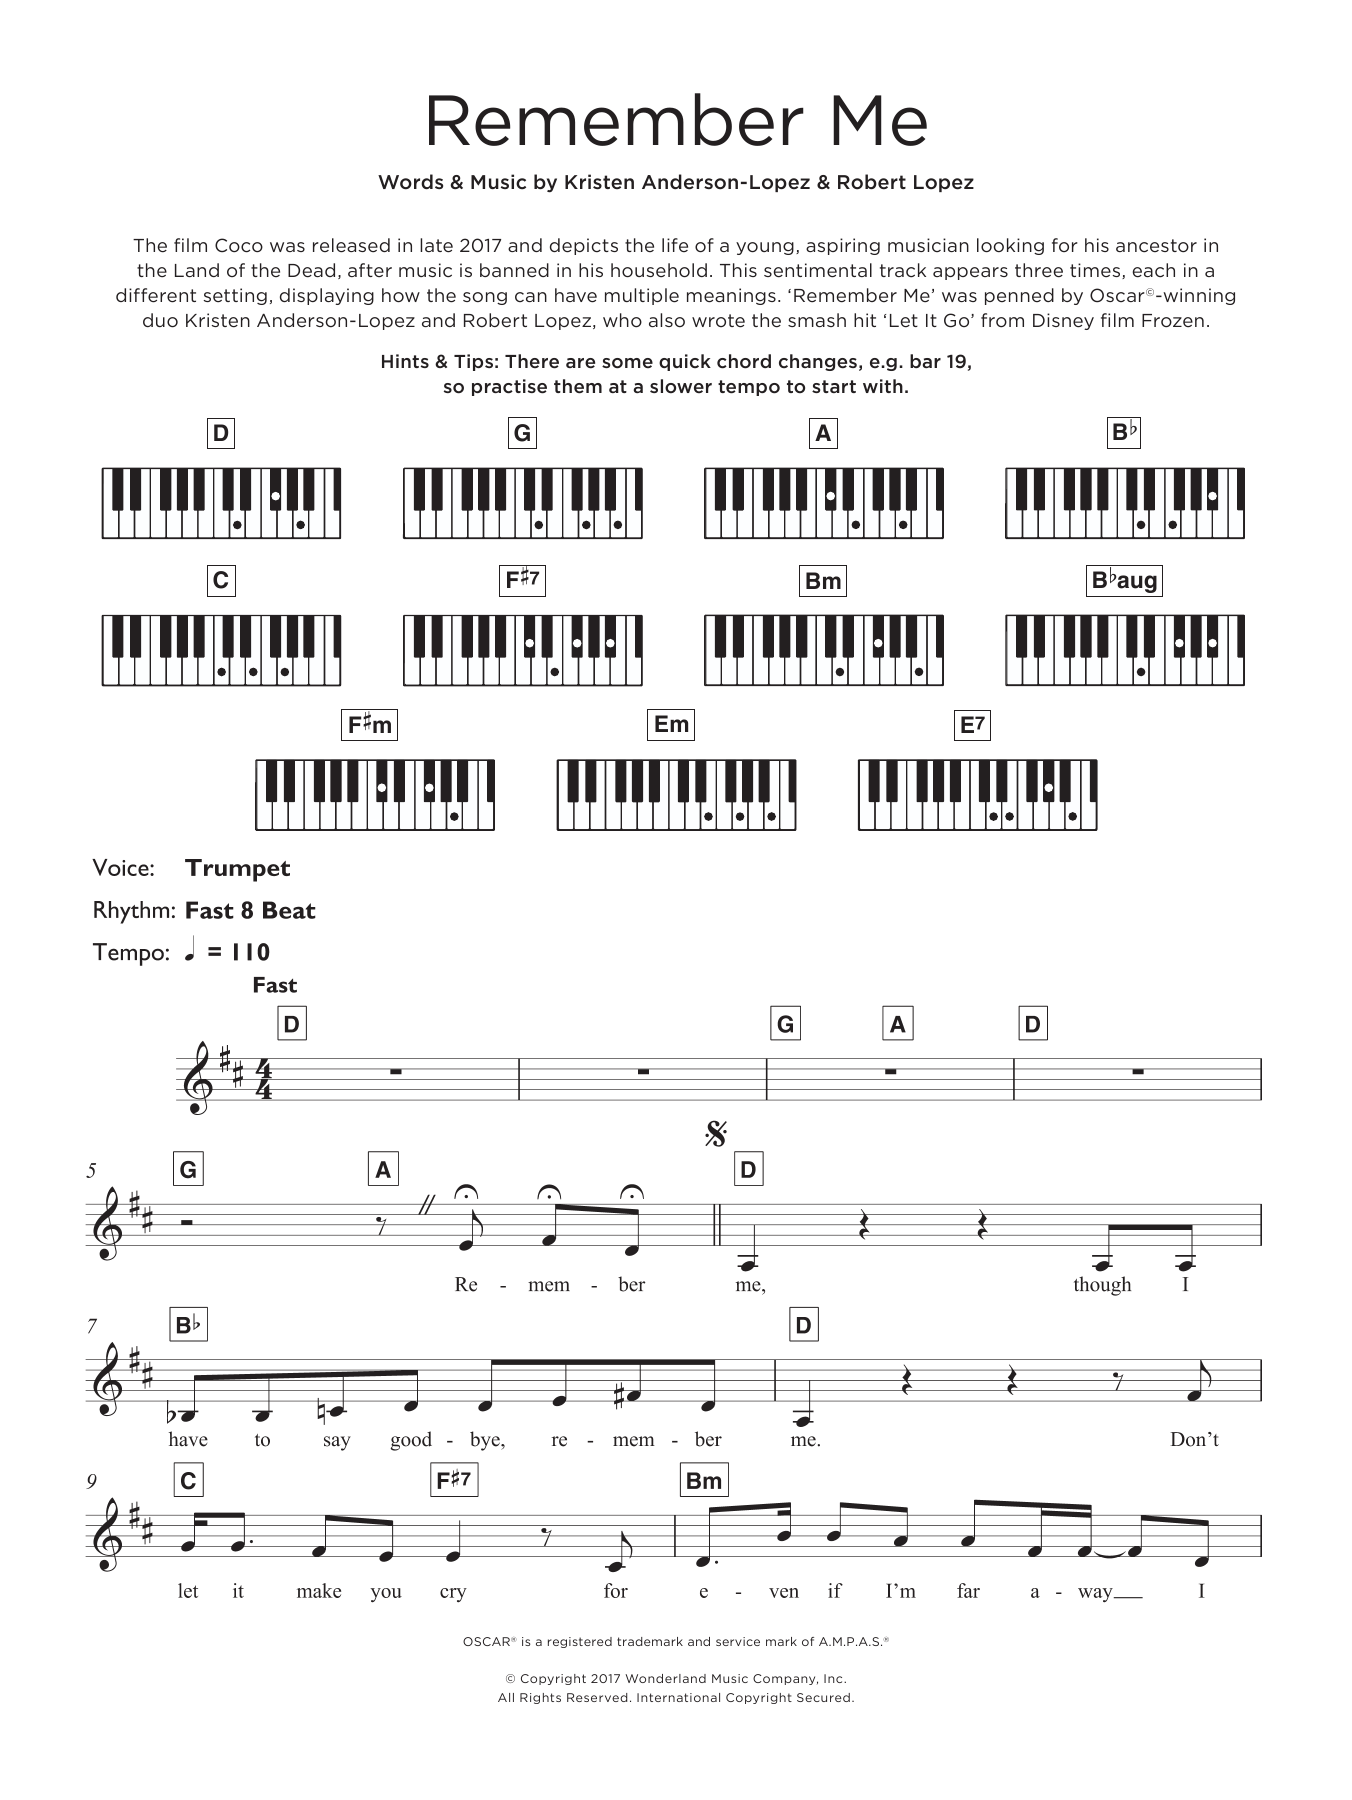 Kristen Anderson-Lopez & Robert Lopez Remember Me (Ernesto de la Cruz) (from Coco) Sheet Music Notes & Chords for Keyboard - Download or Print PDF